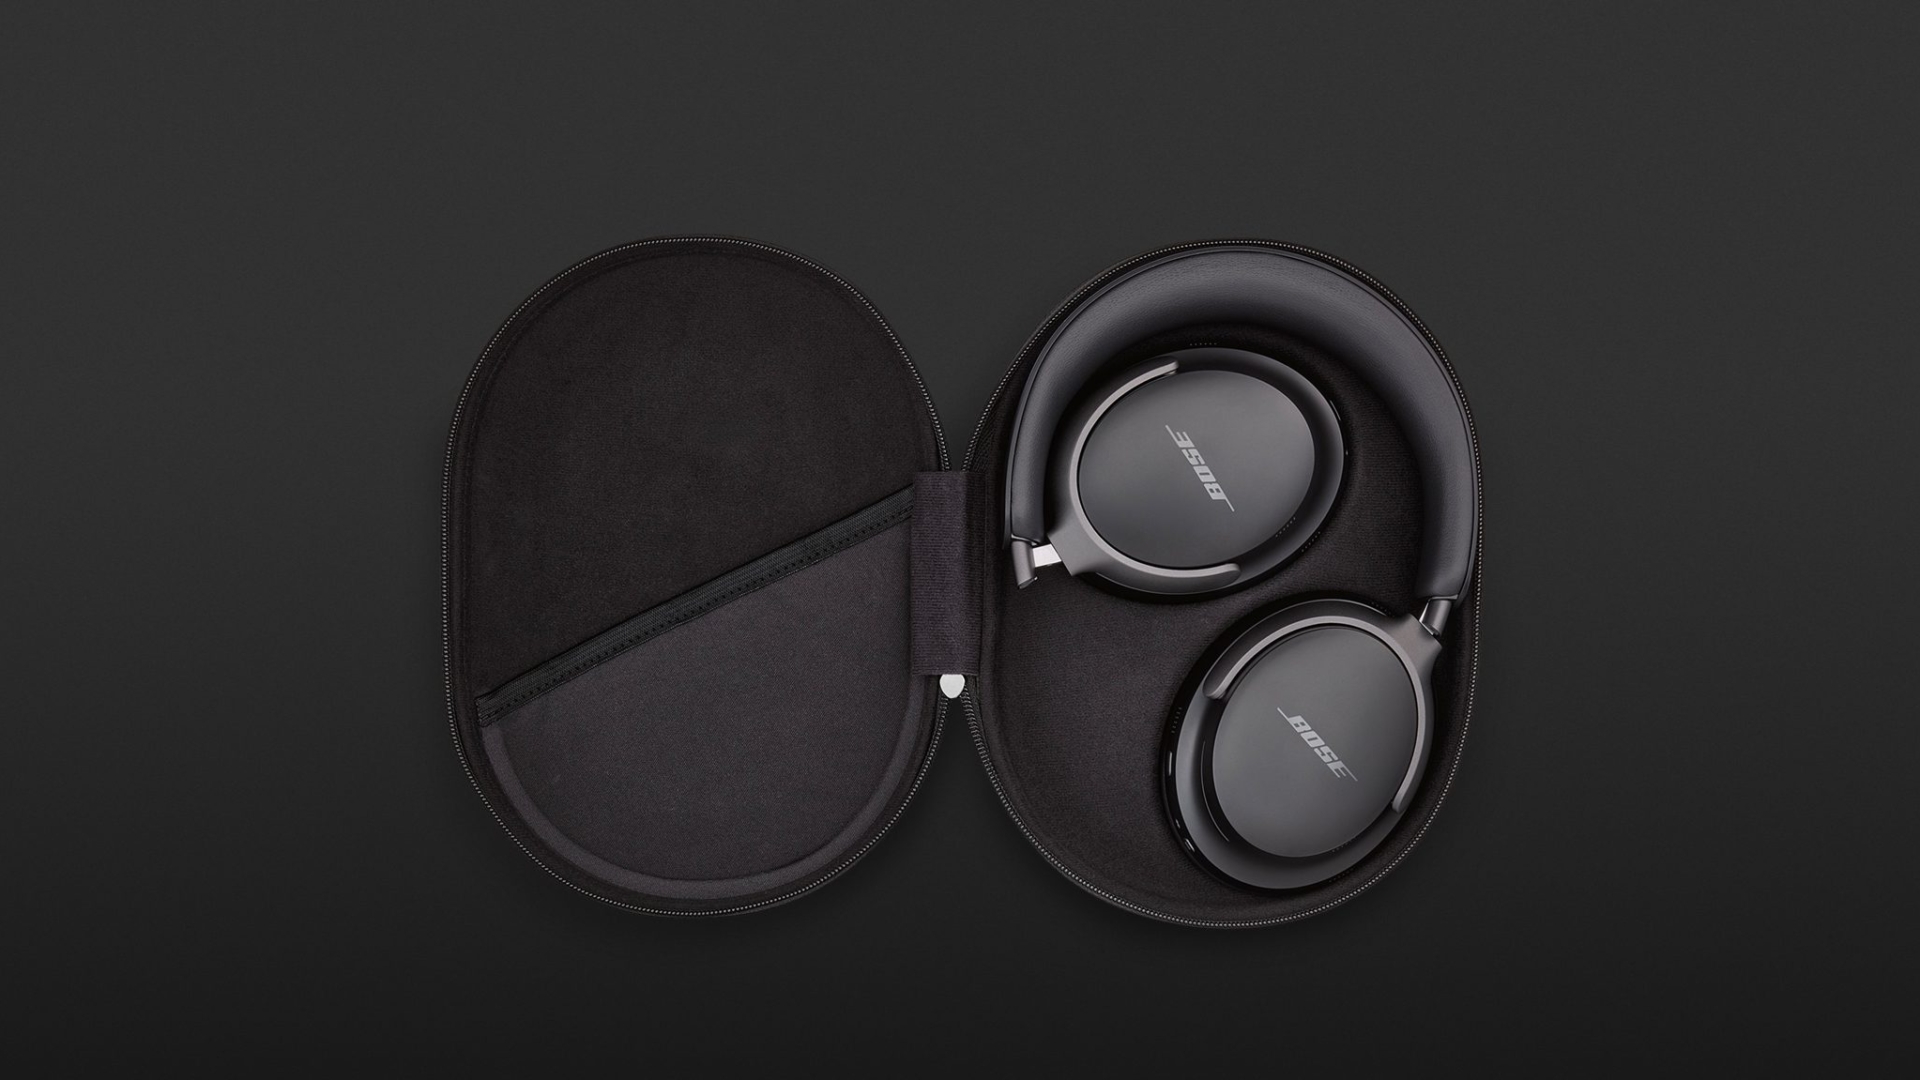 Bose QuietComfort Ultra Headphones - White